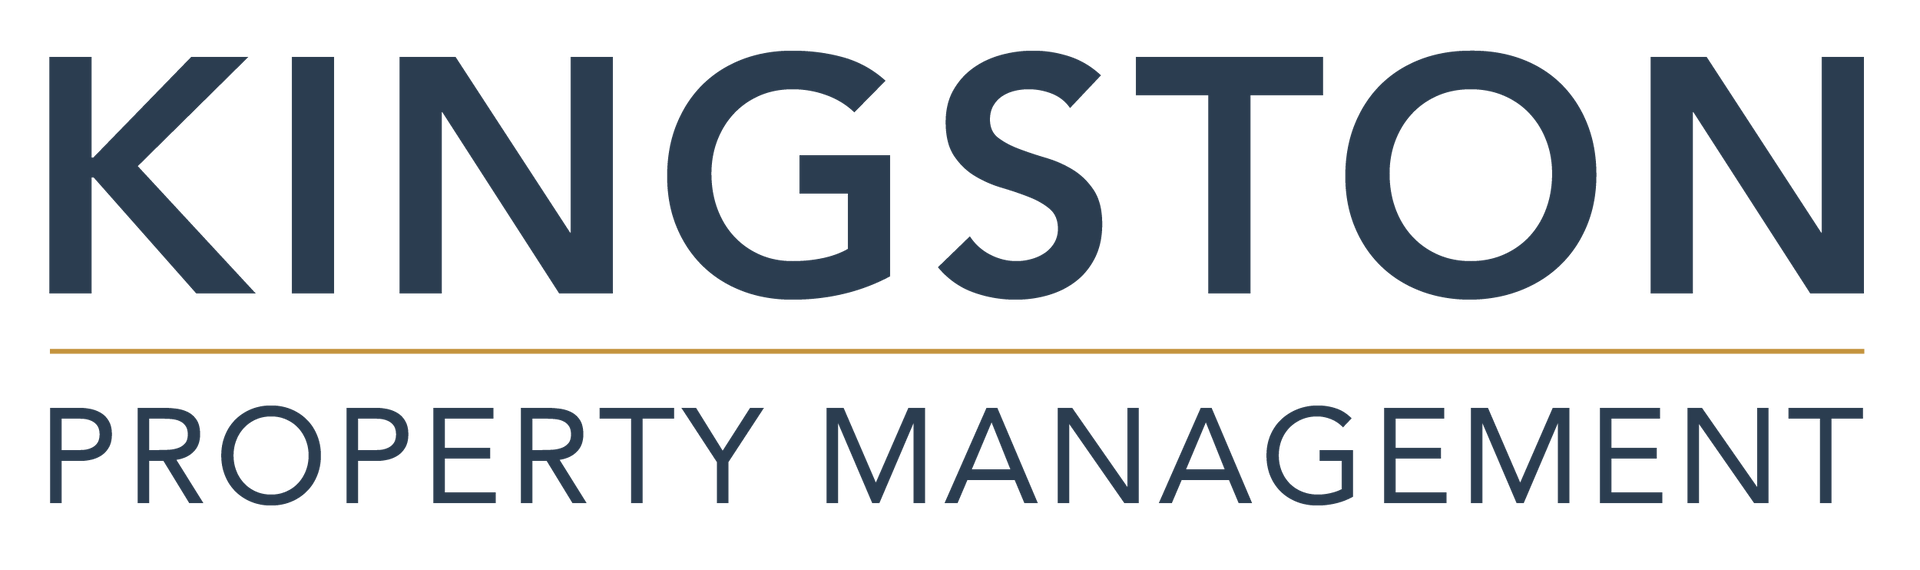 Kingston Property Management Logo - header, go to homepage